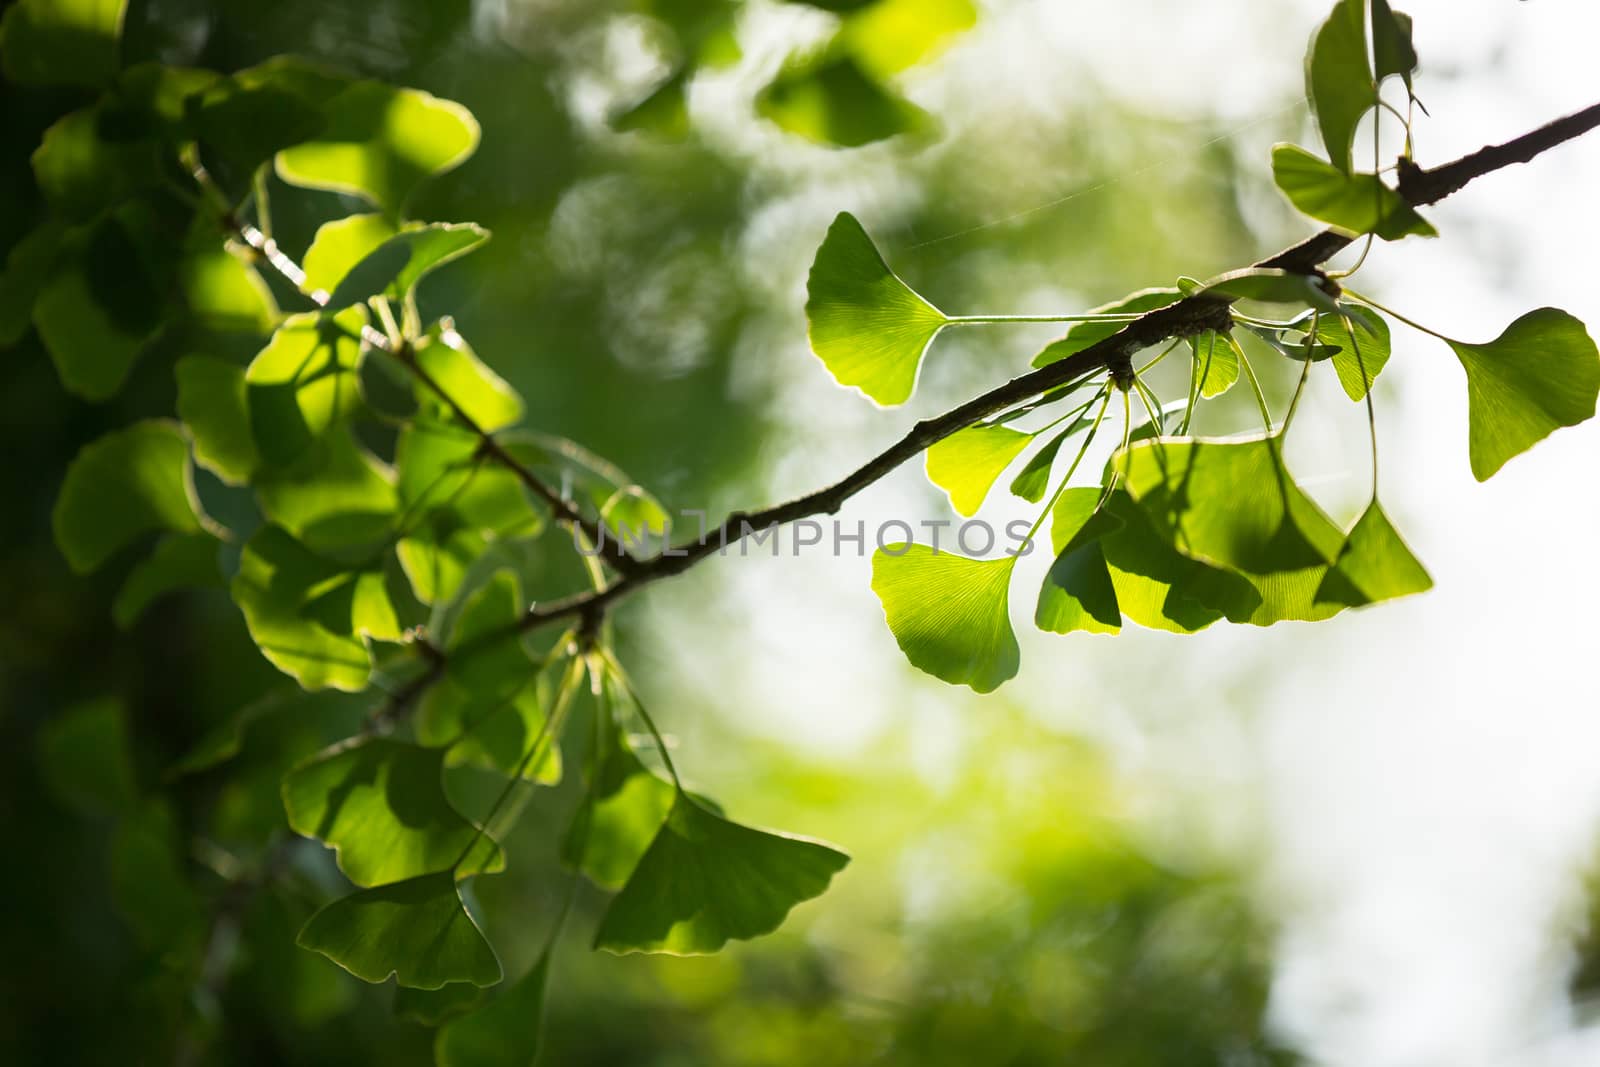 Ginkgo biloba tree branch with leafs by viktor_cap